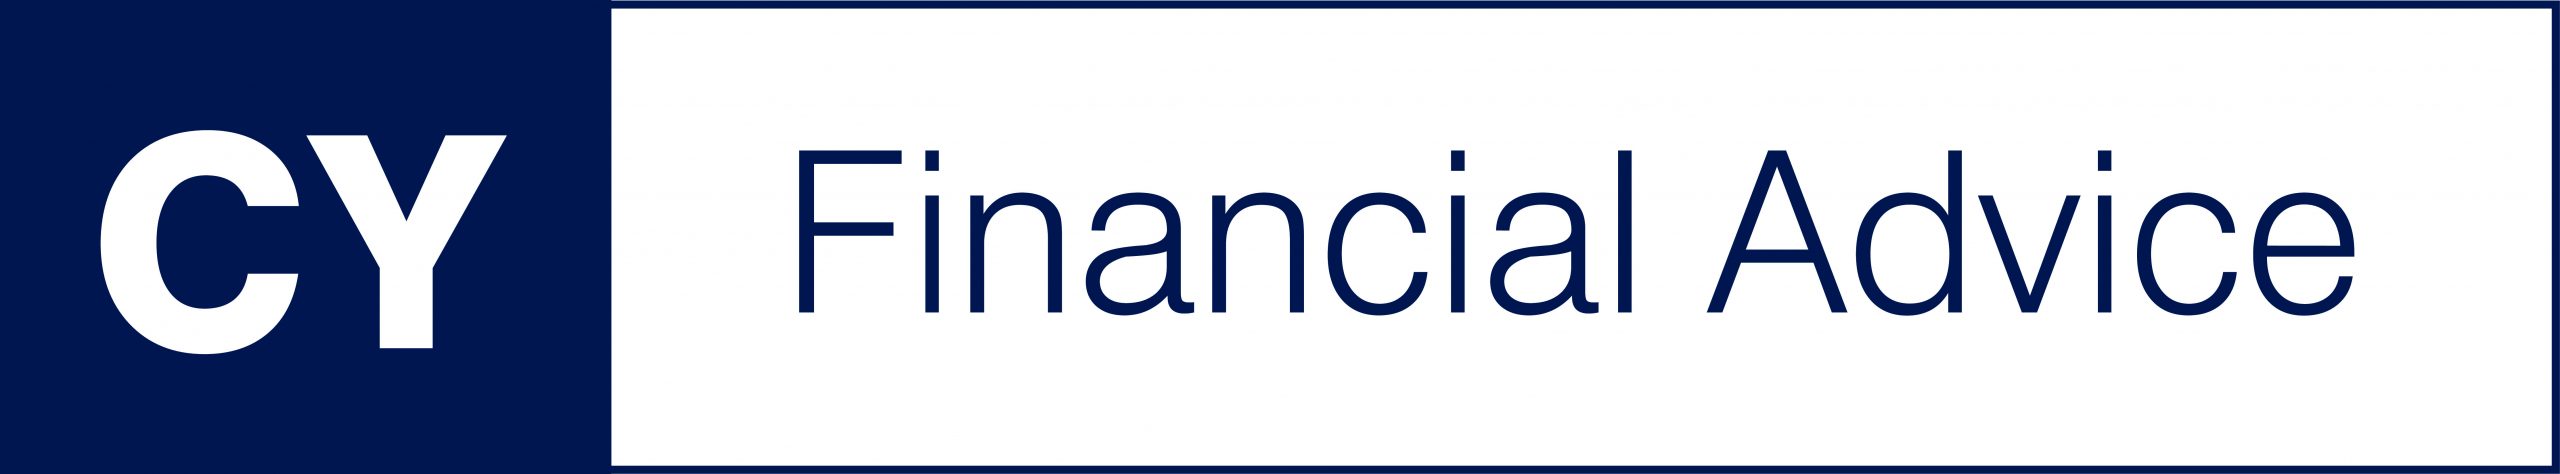 CY Financial Advice Logo